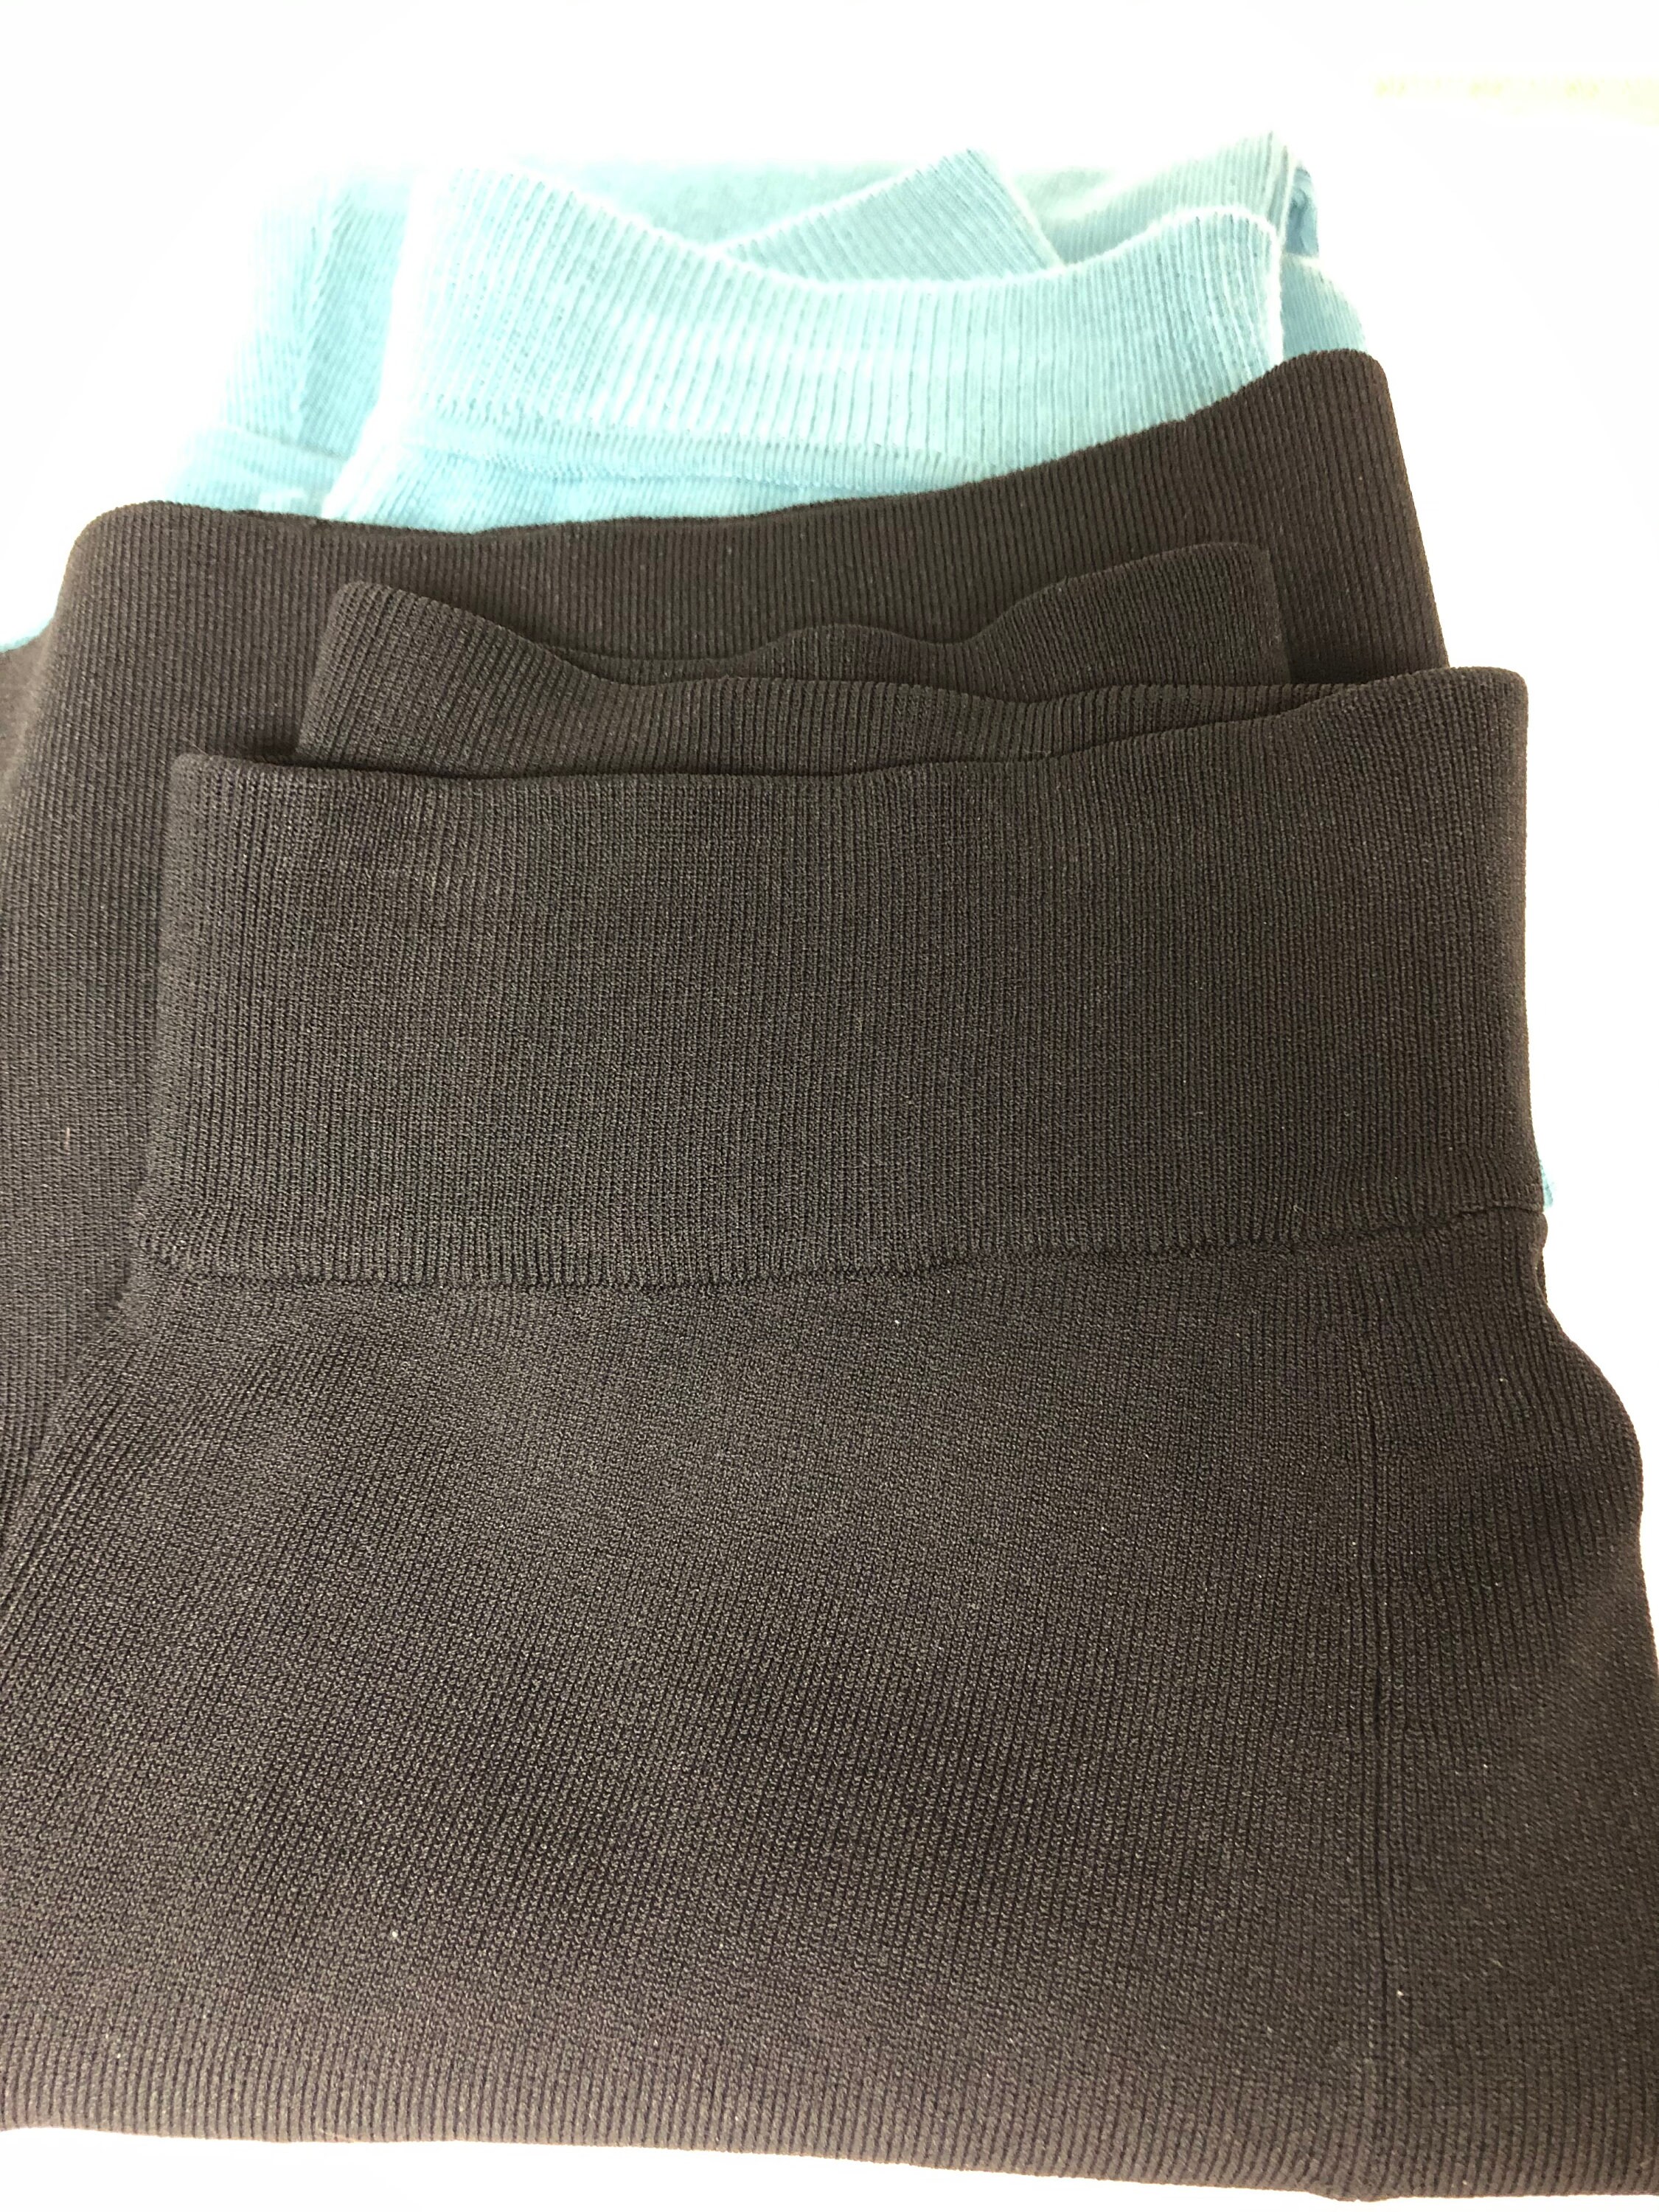 2 Pair Pants, Light Blue Wool Blend Knit Long Taper Leg, Black Shorter Wide Leg Rayon Nylon Blend, Stretch Waist, No Pockets